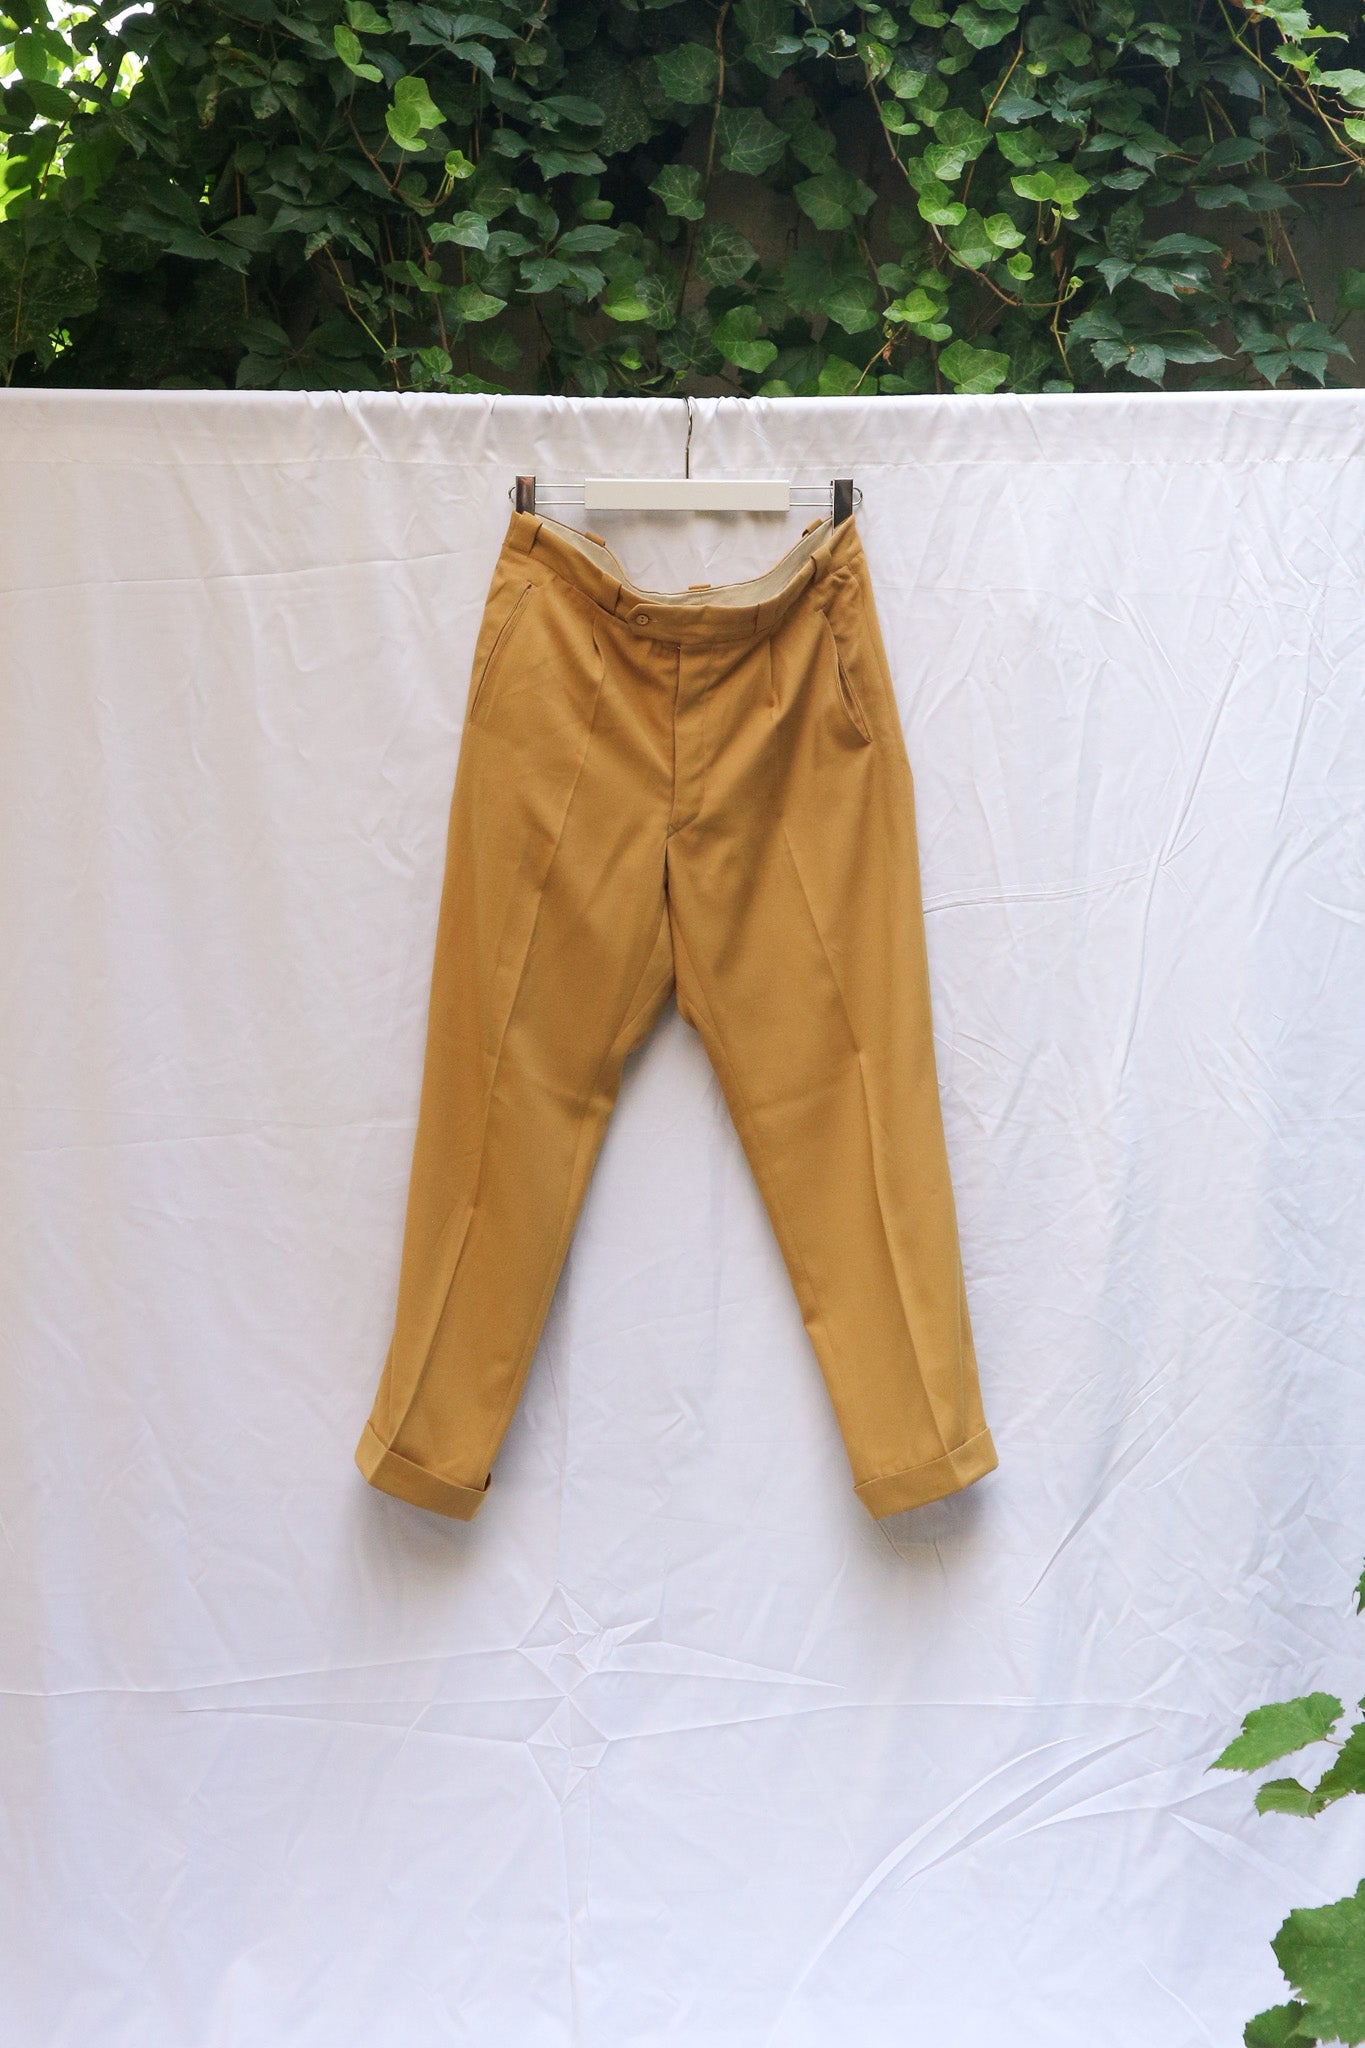 Vintage trousers